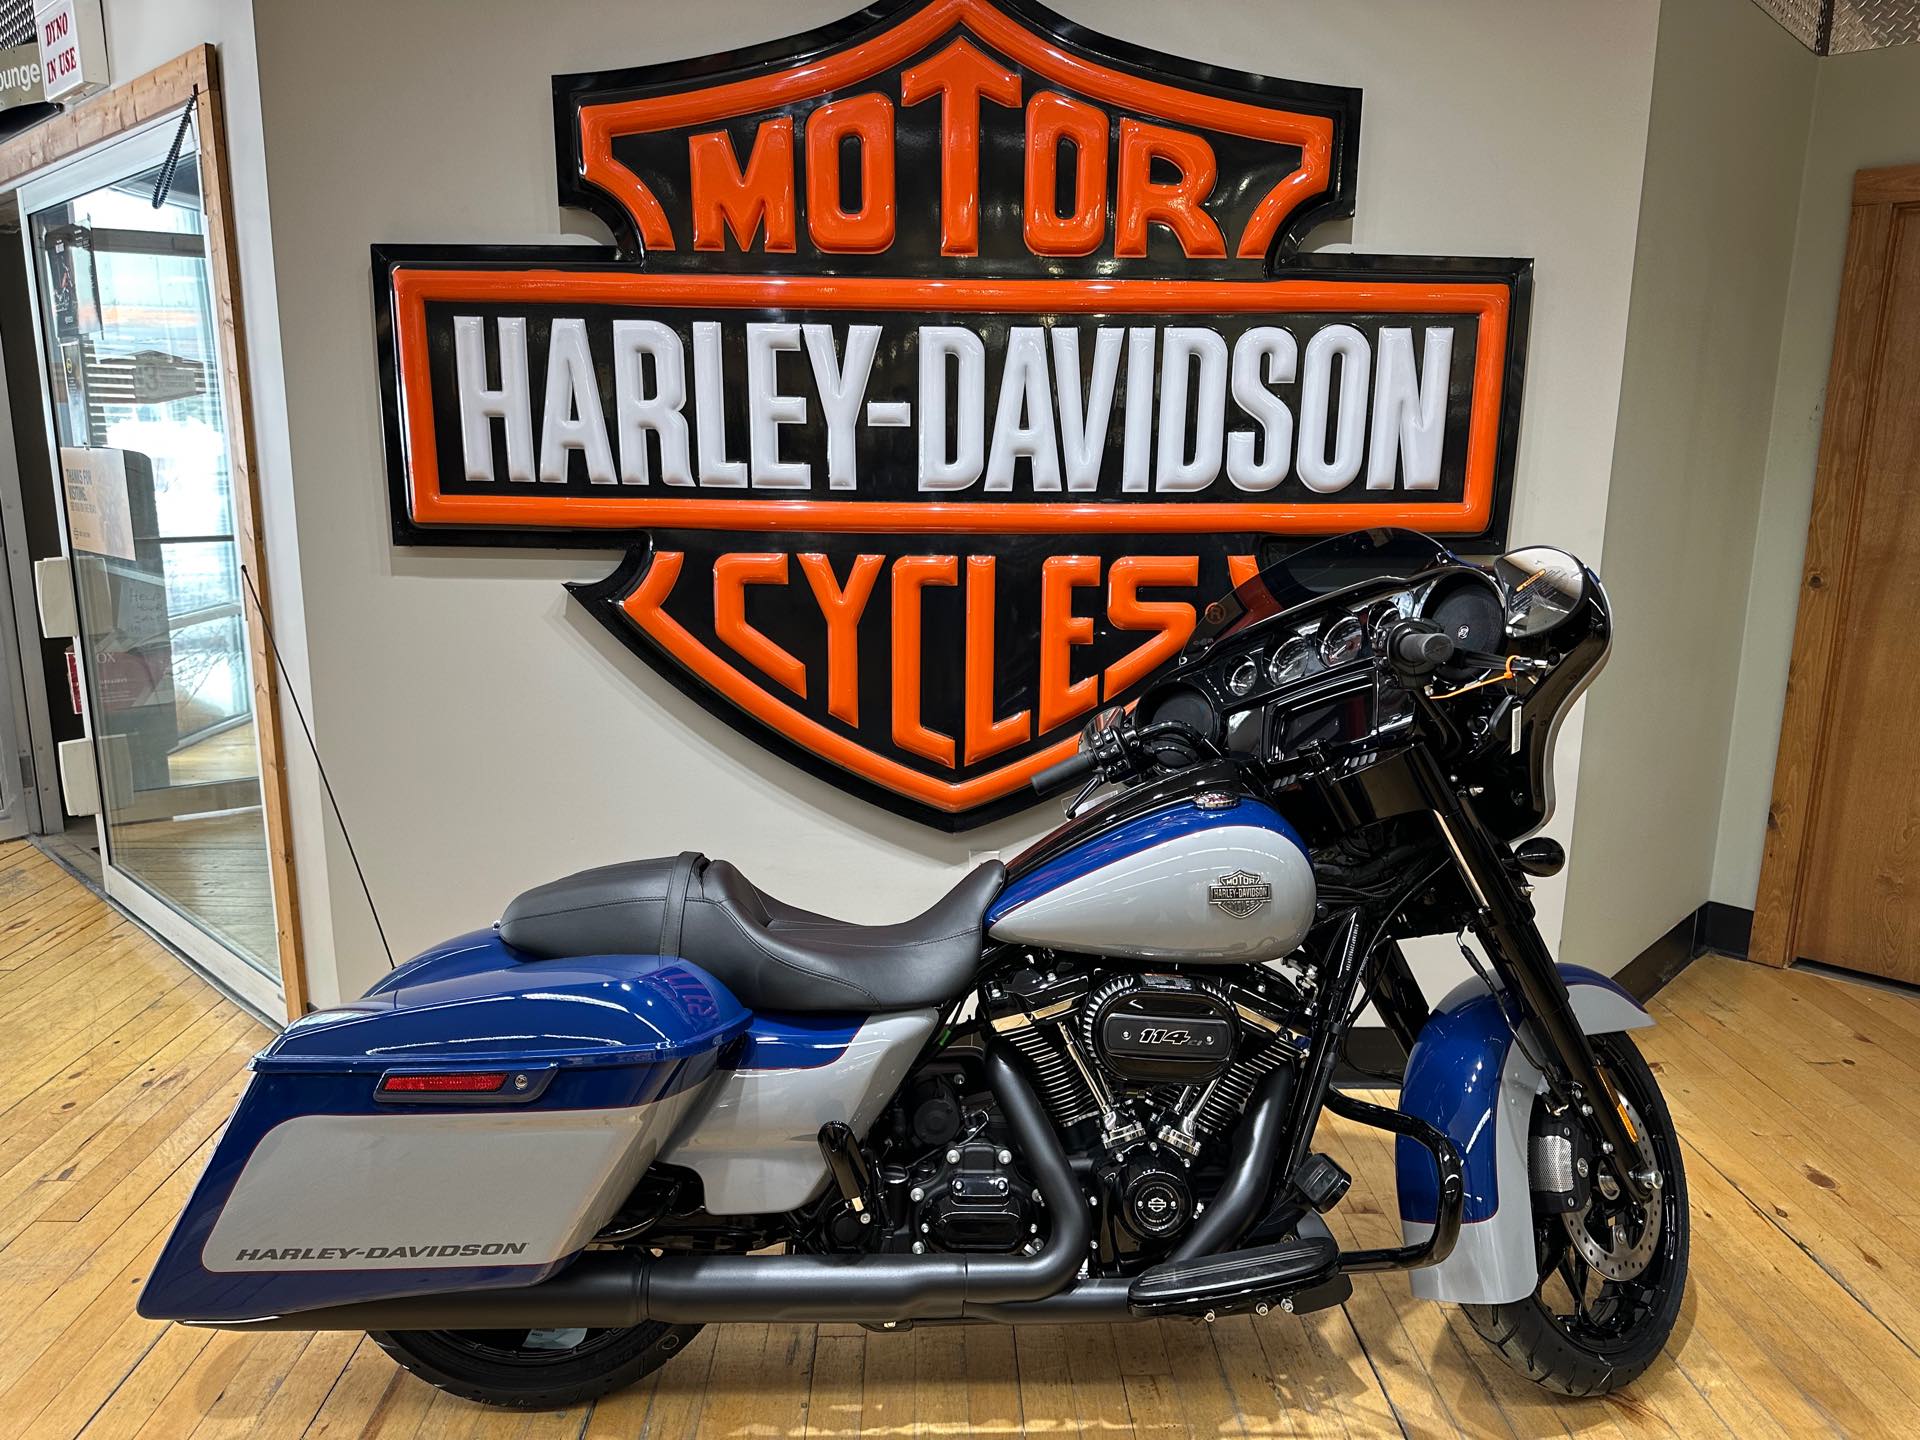 2023 Harley-Davidson Street Glide Special at Zips 45th Parallel Harley-Davidson